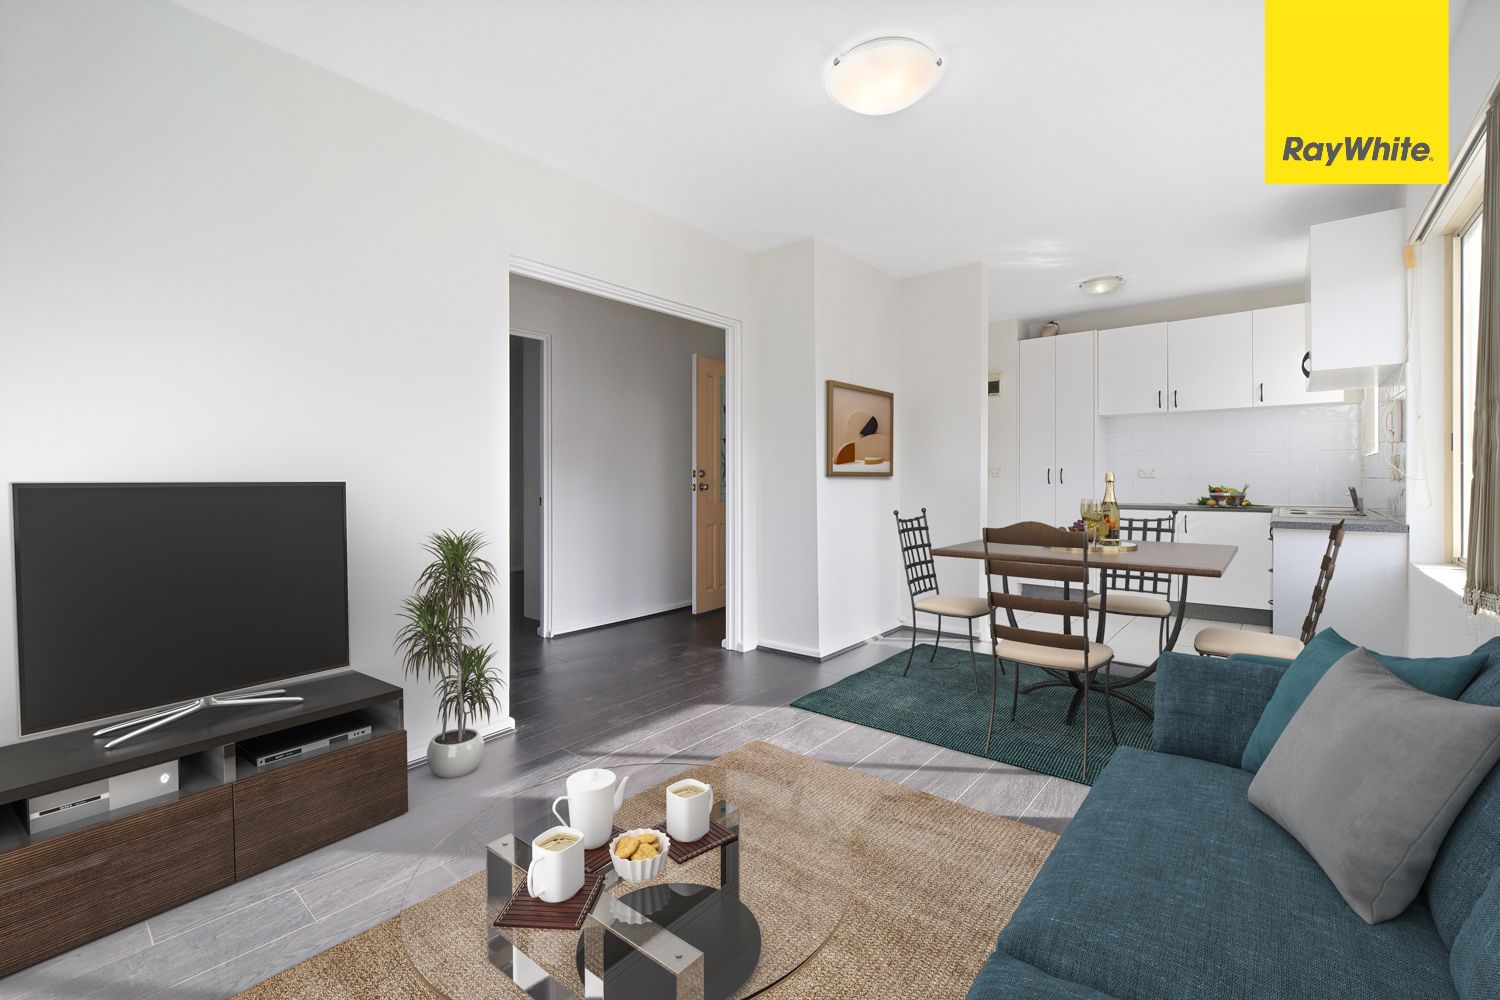 2 bedrooms Apartment / Unit / Flat in 10/82 Weston Street HARRIS PARK NSW, 2150